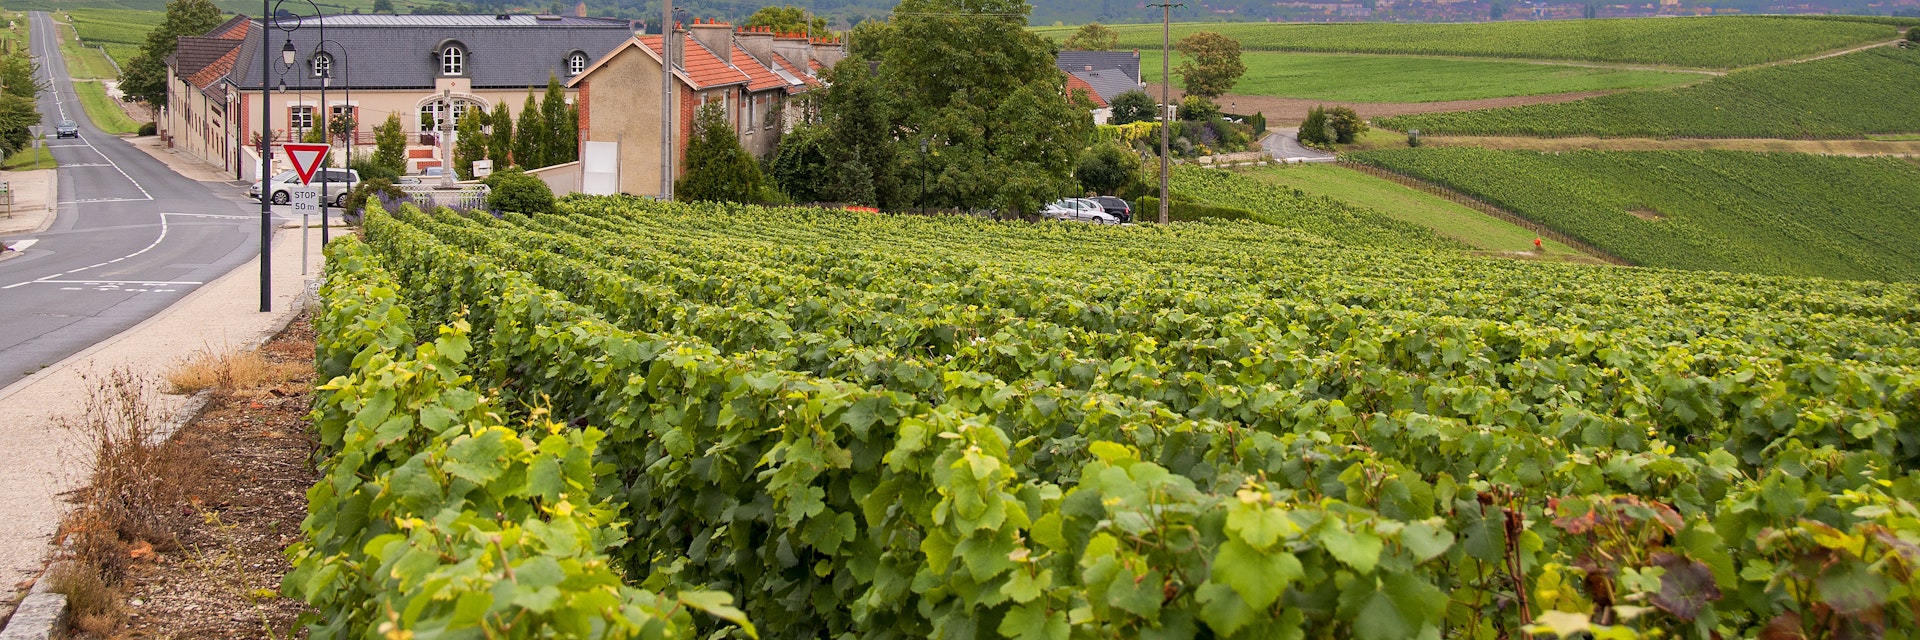 View Vineyards in Epernay. France